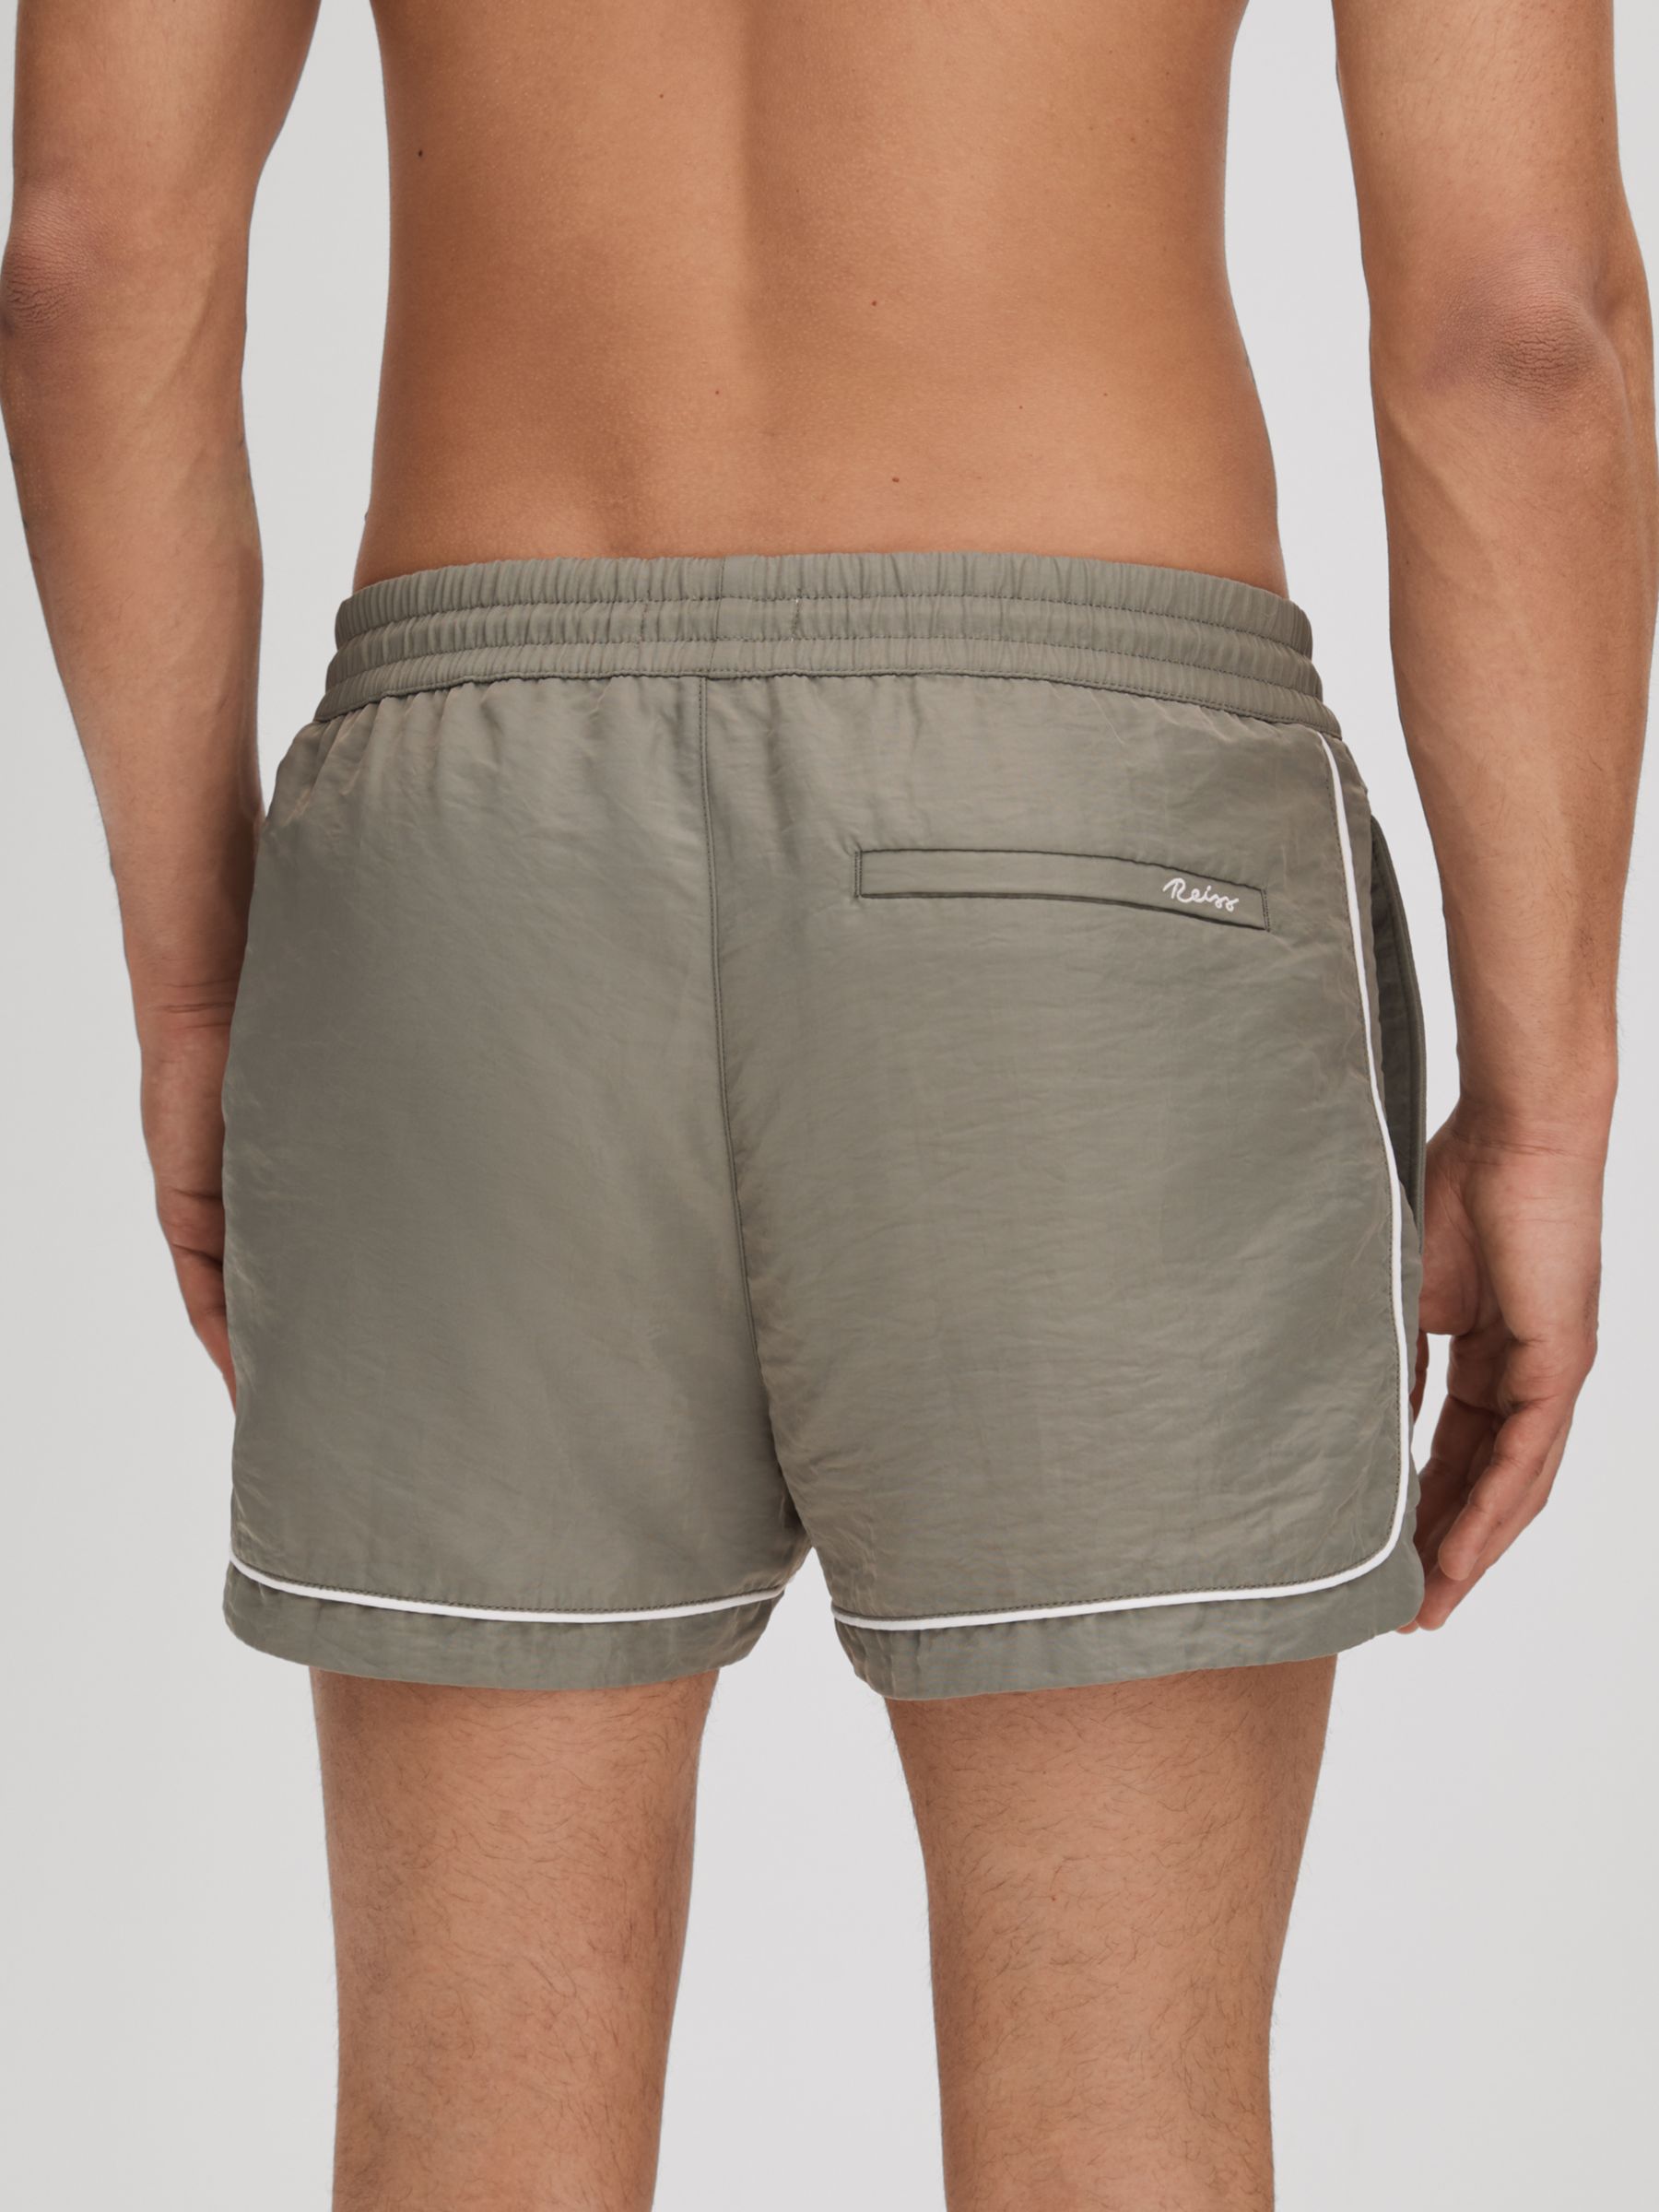 Reiss Azure Drawstring Shorts, Pistachio, S